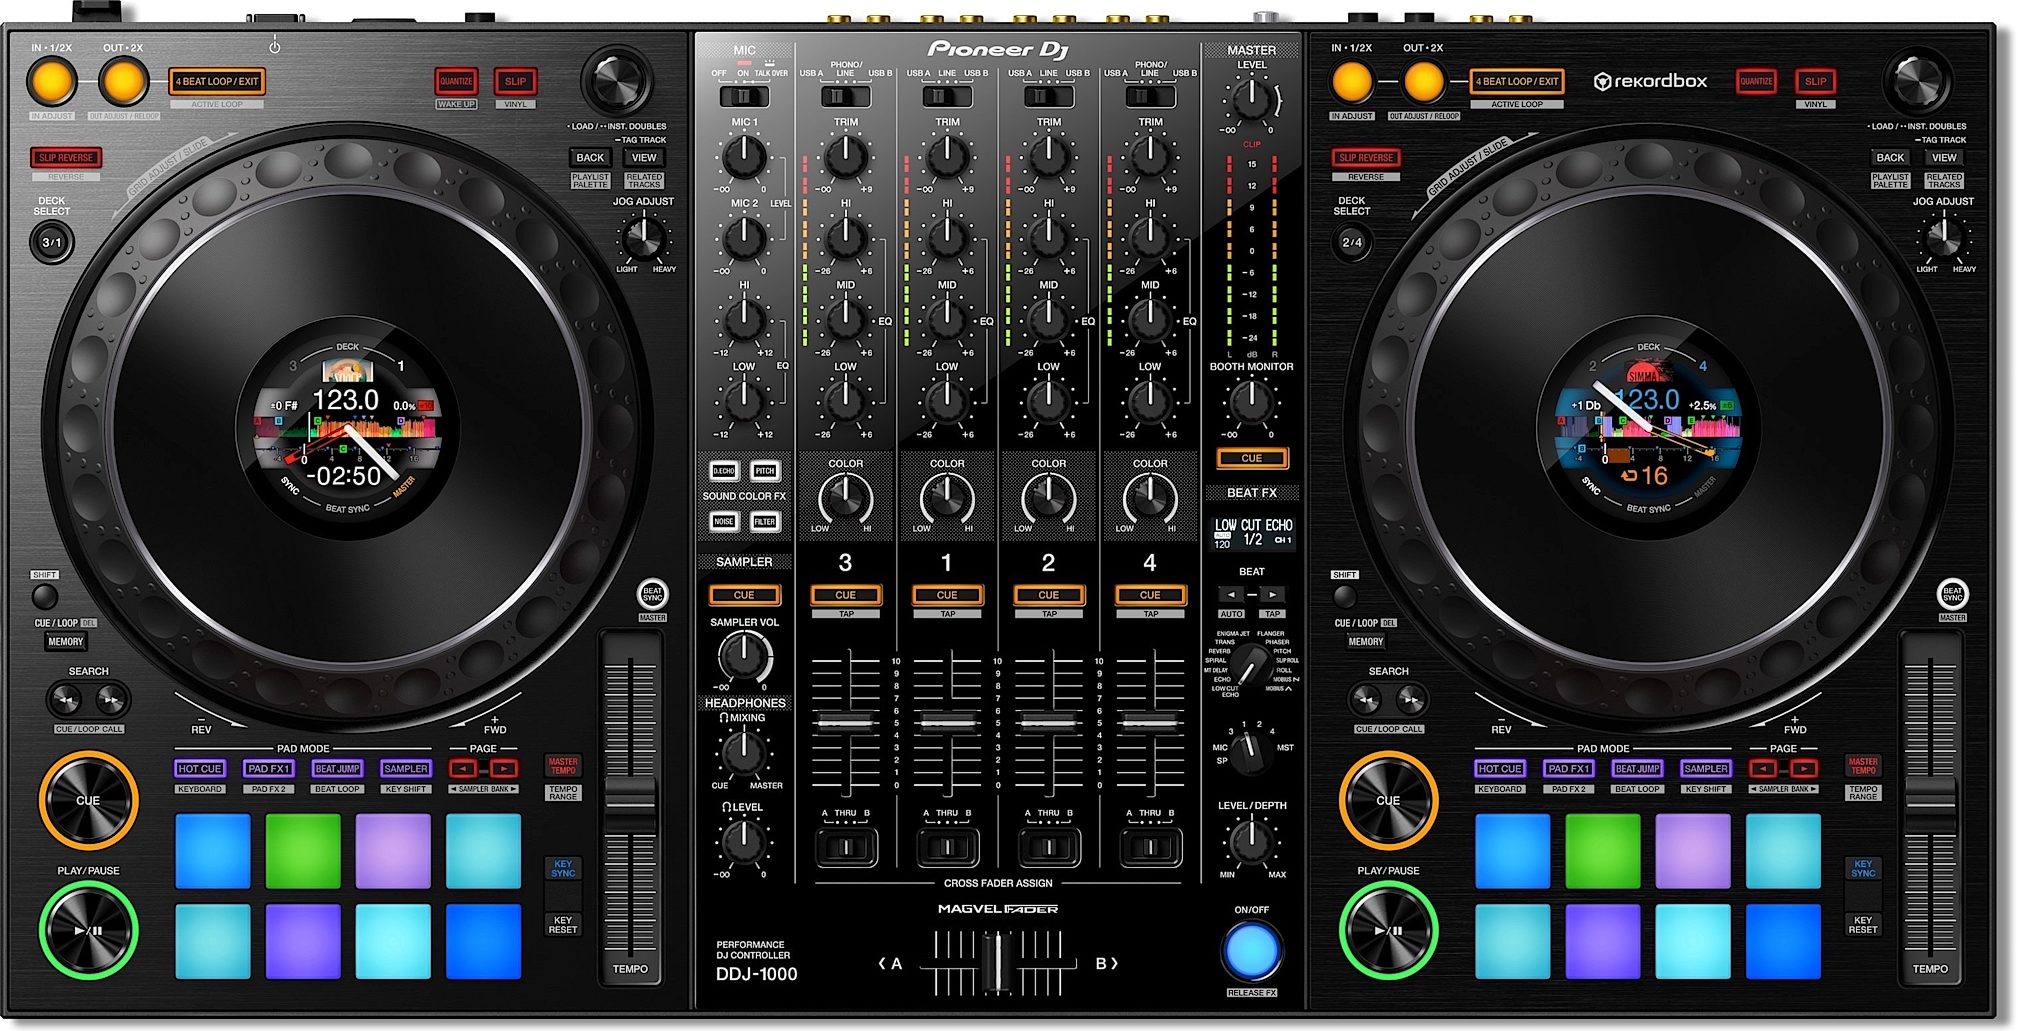 Pioneer DDJ-1000 Professional Controller for Rekordbox DJ